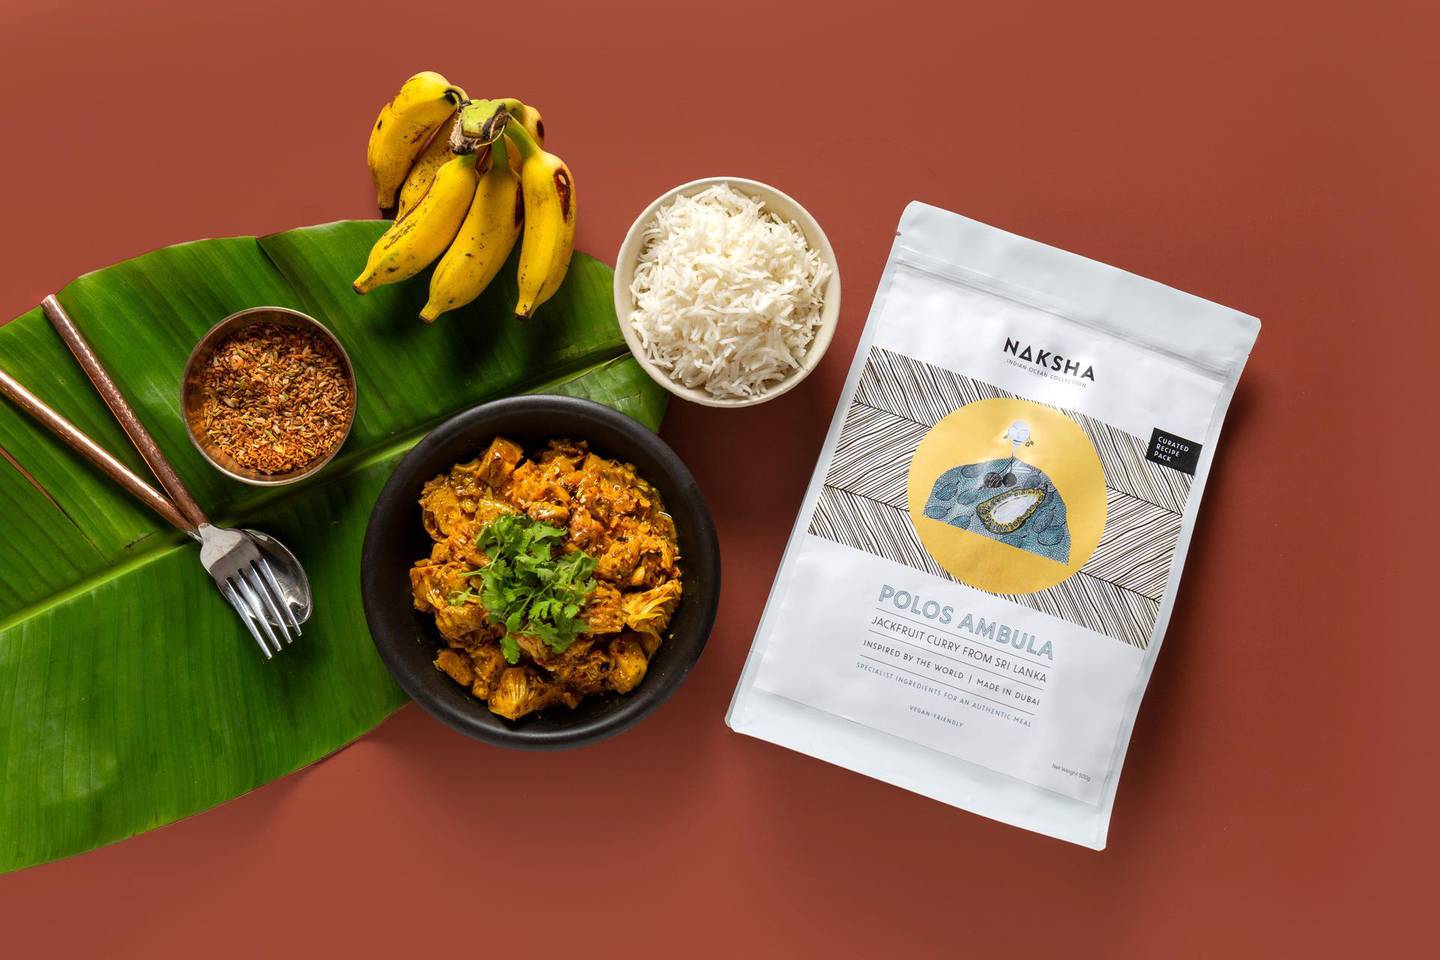 Cook Sri Lankan dish Polos ambula at home with a food kit from Naksha Collections